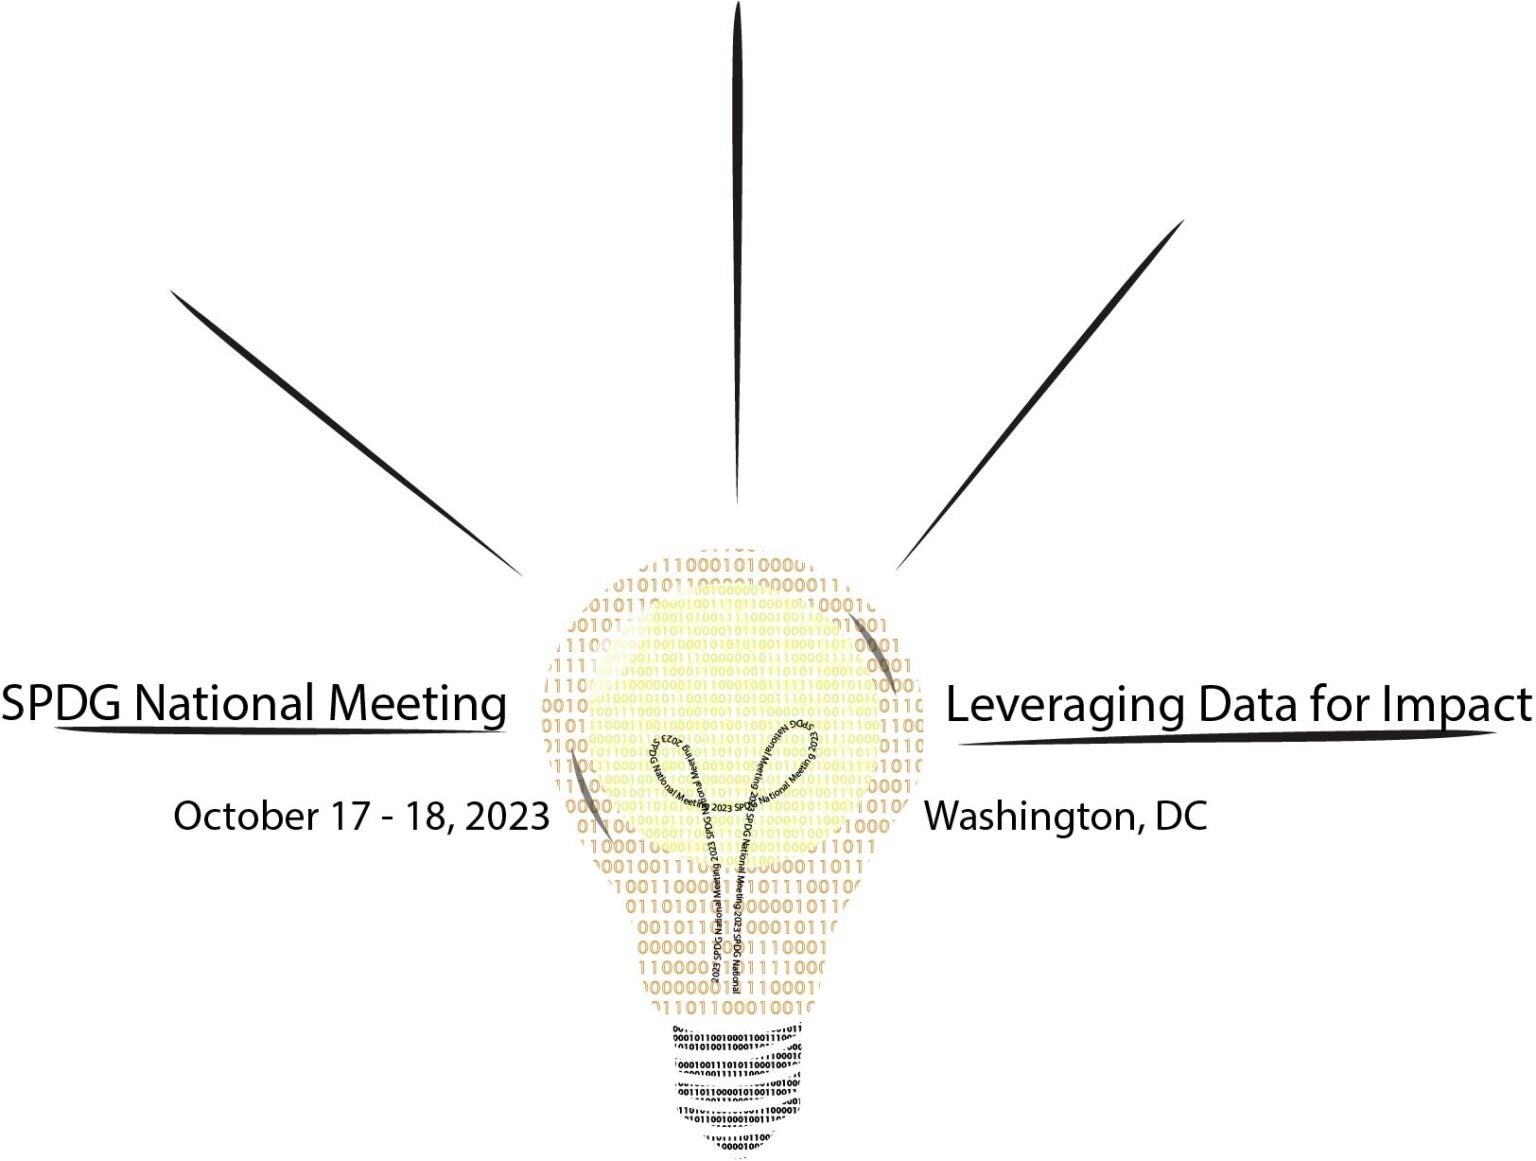 SPDG National Meeting, Leveraging Data for Impact, October 17-18 2023, Washington D.C.